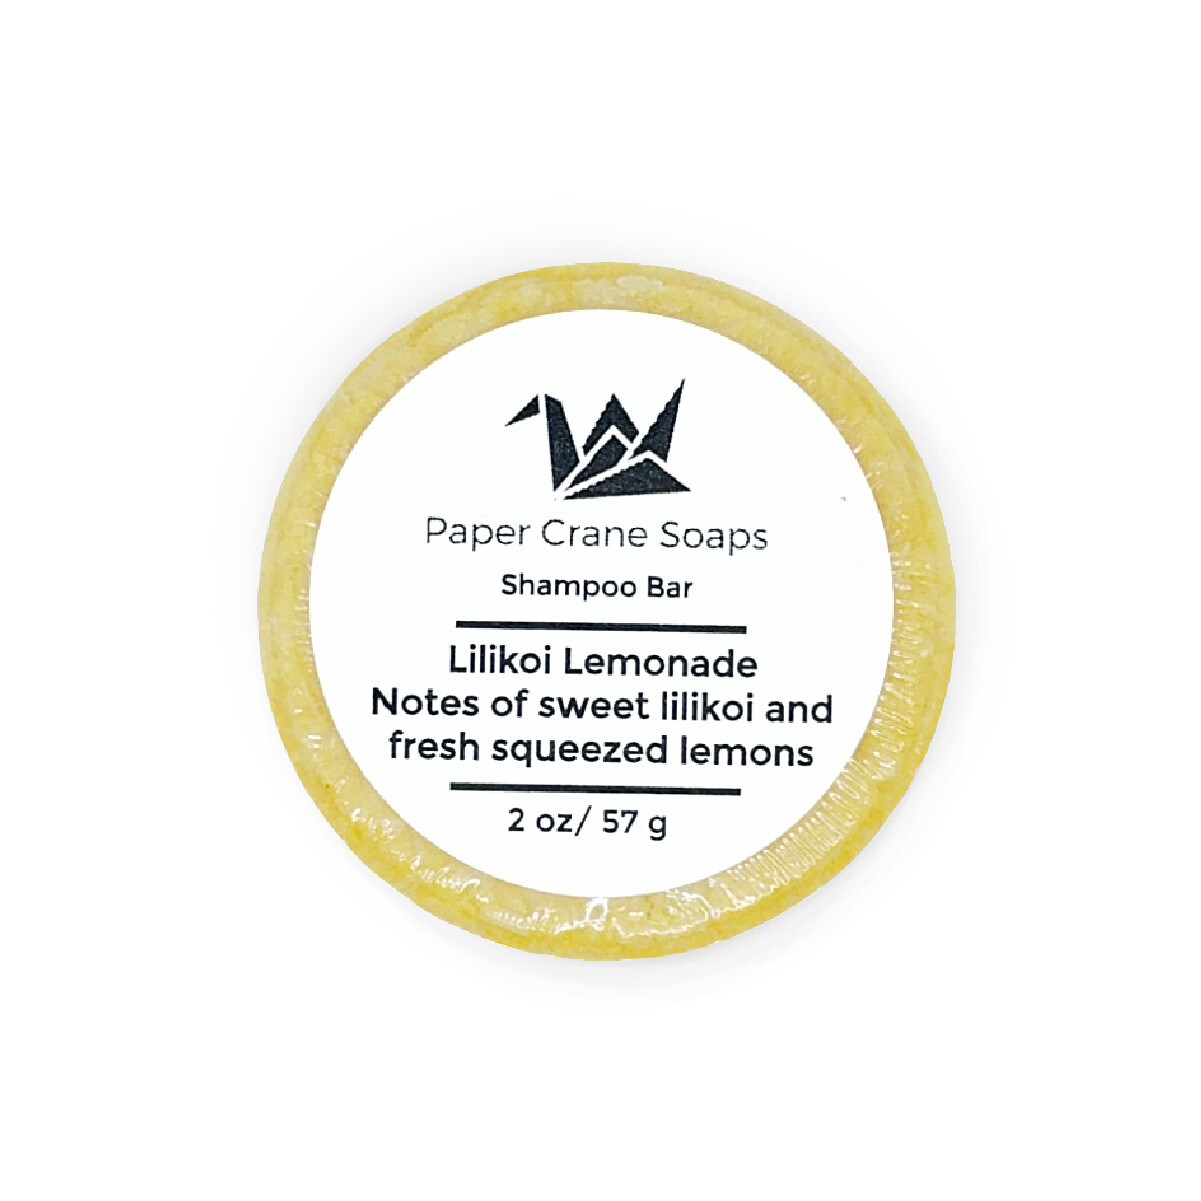 Paper Crane Soaps, Shampoo Bar - Lilikoi Lemonade (1.65 Oz.)